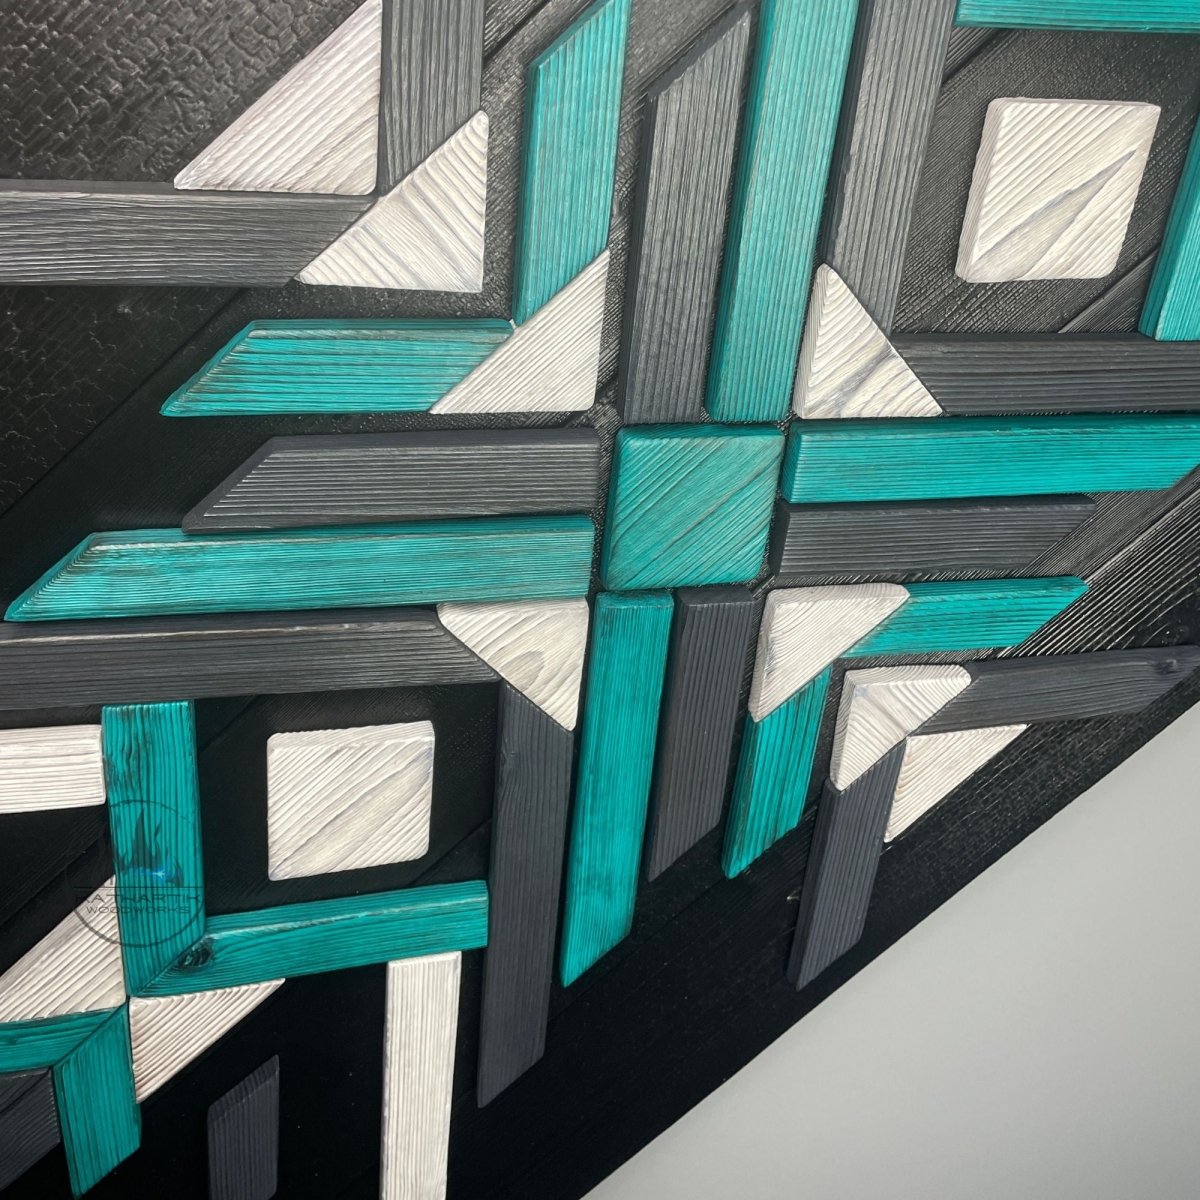 Modern Mosaic Wood Geometric Wall Art in White Black Turquoise and Gray - DaRosa Creations